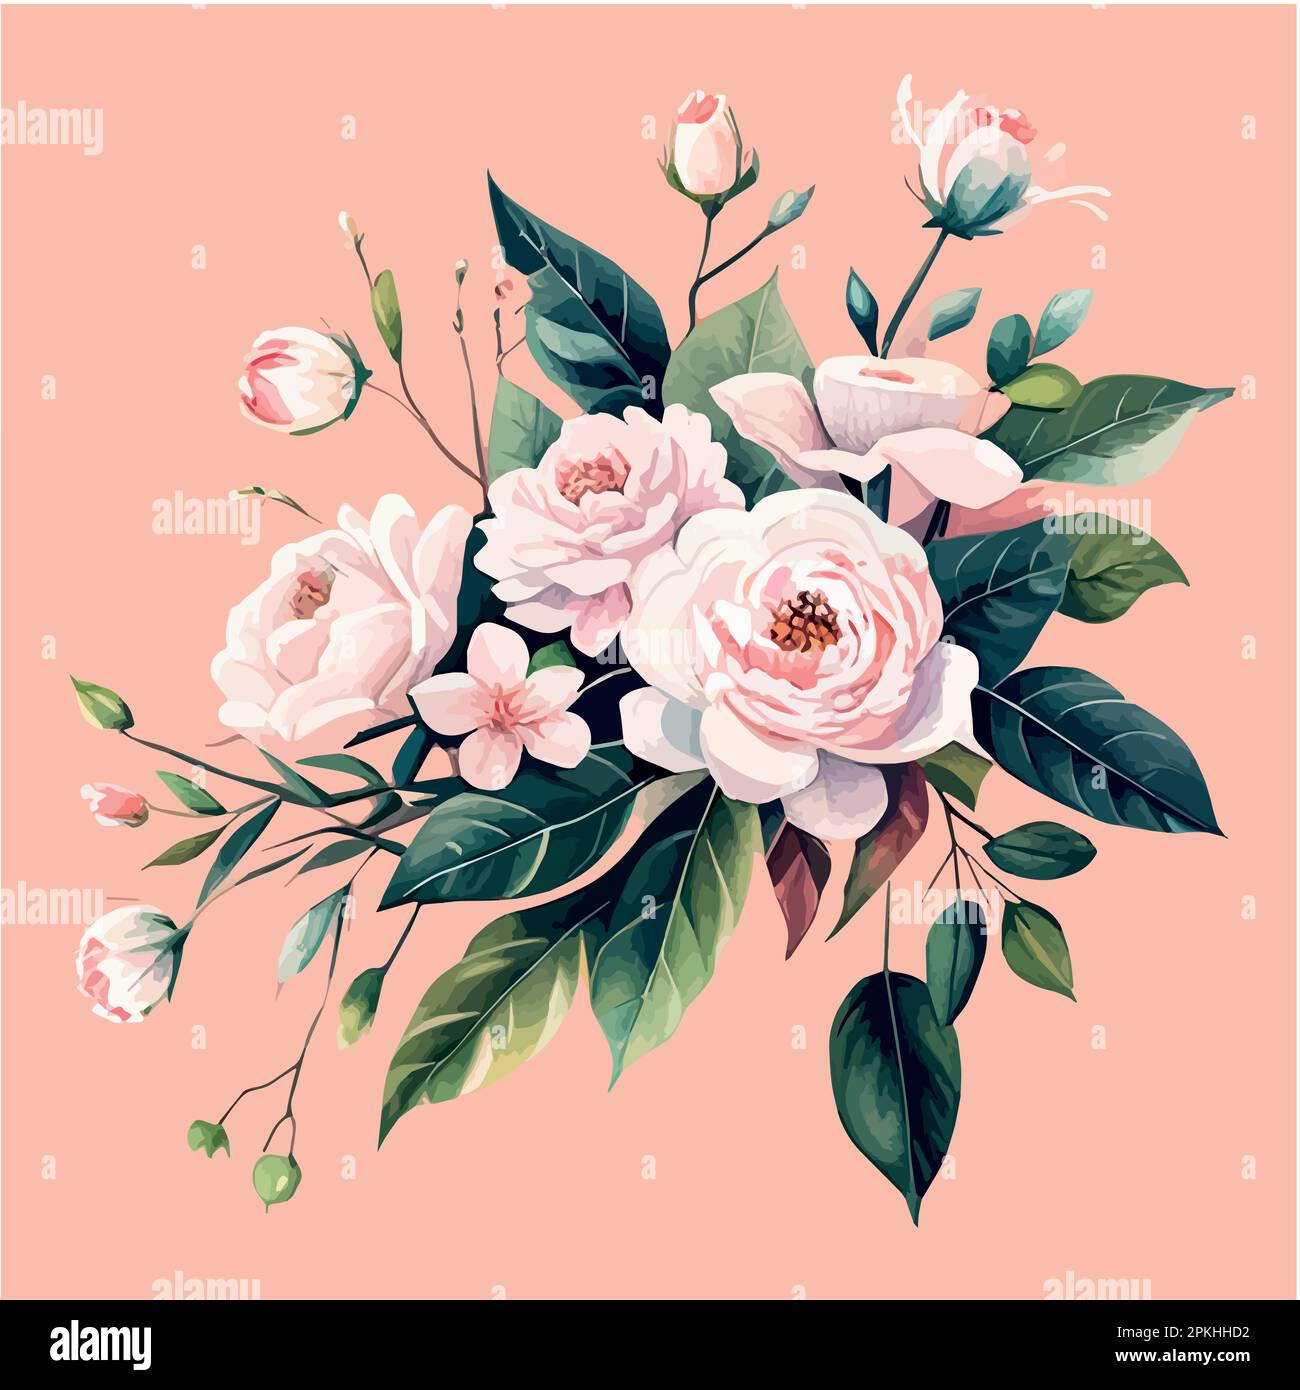 floral de acuarela blush rosa rosas flor hoja verde hojas ramas colección ramos. Papelería de boda, saludos, fondos de pantalla de moda de fondo. Ilustración vectorial sobre fondo de color